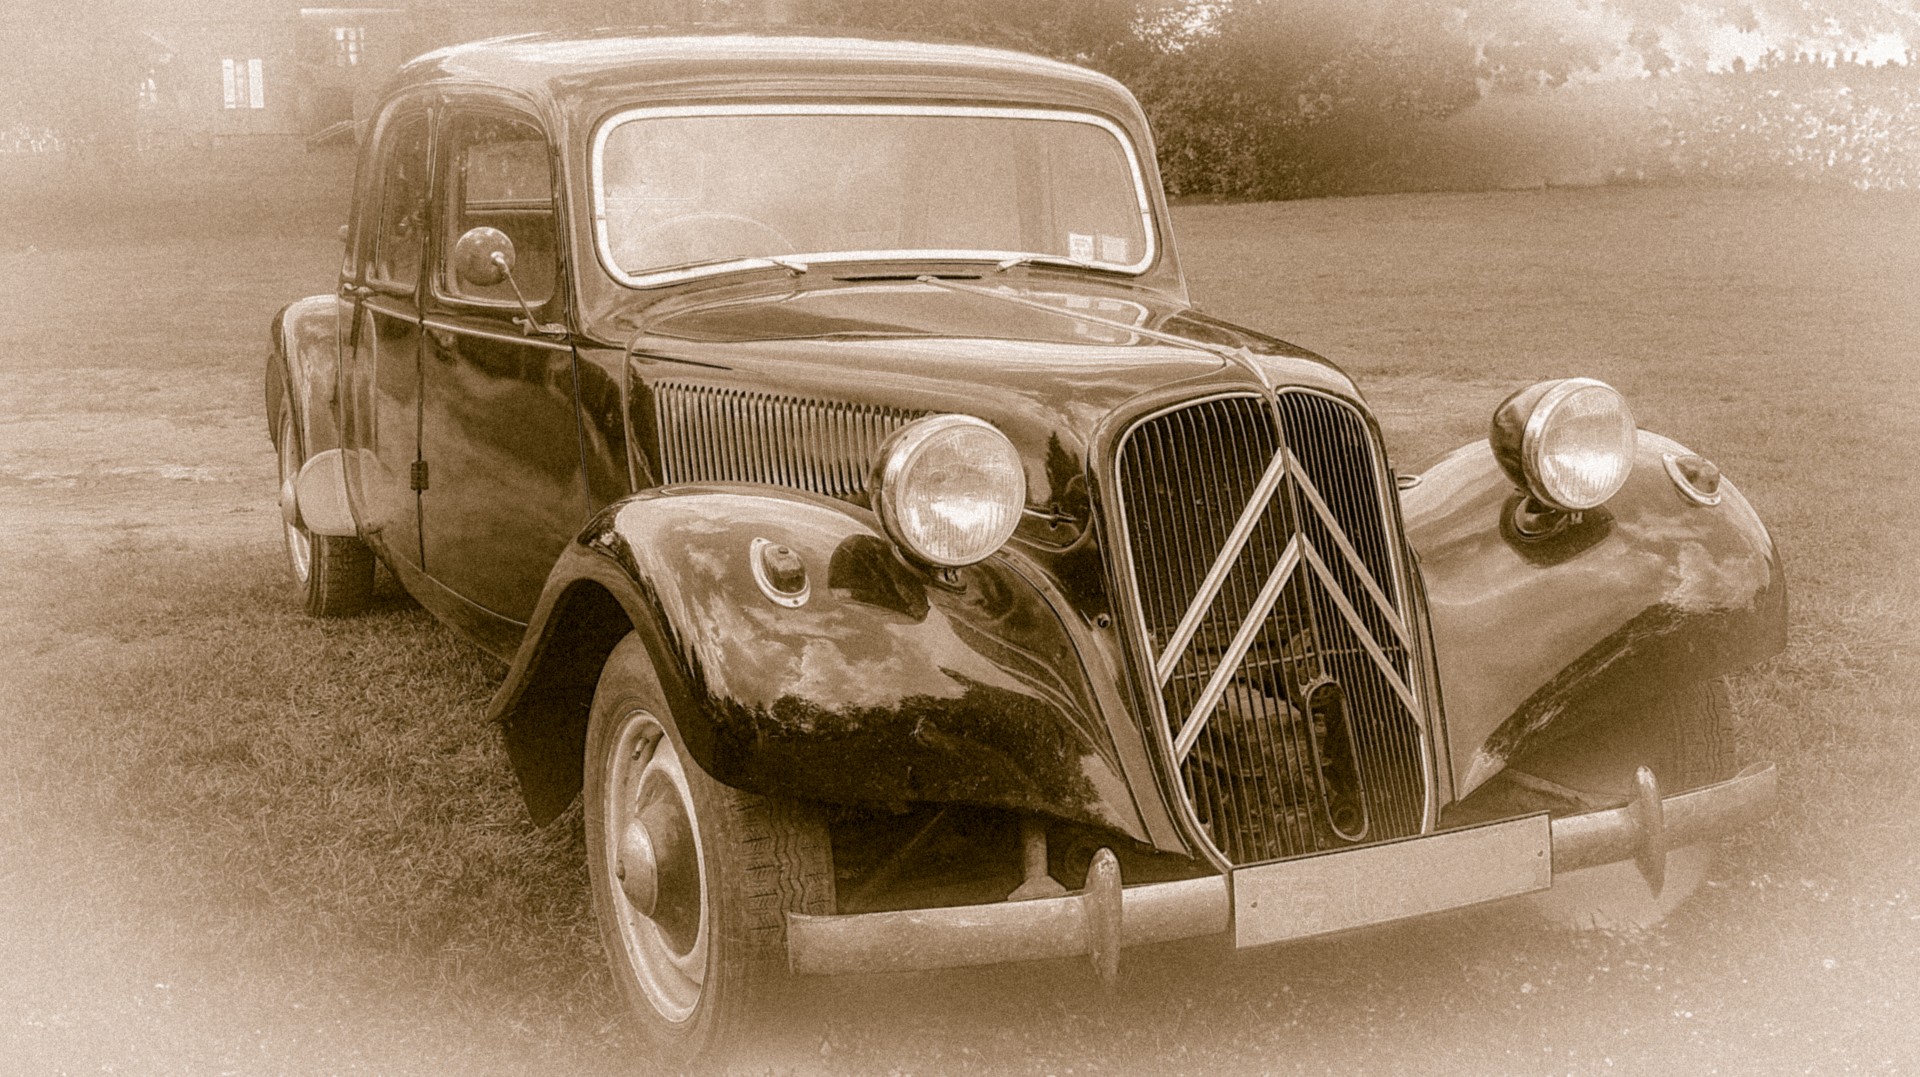 Car Vintage